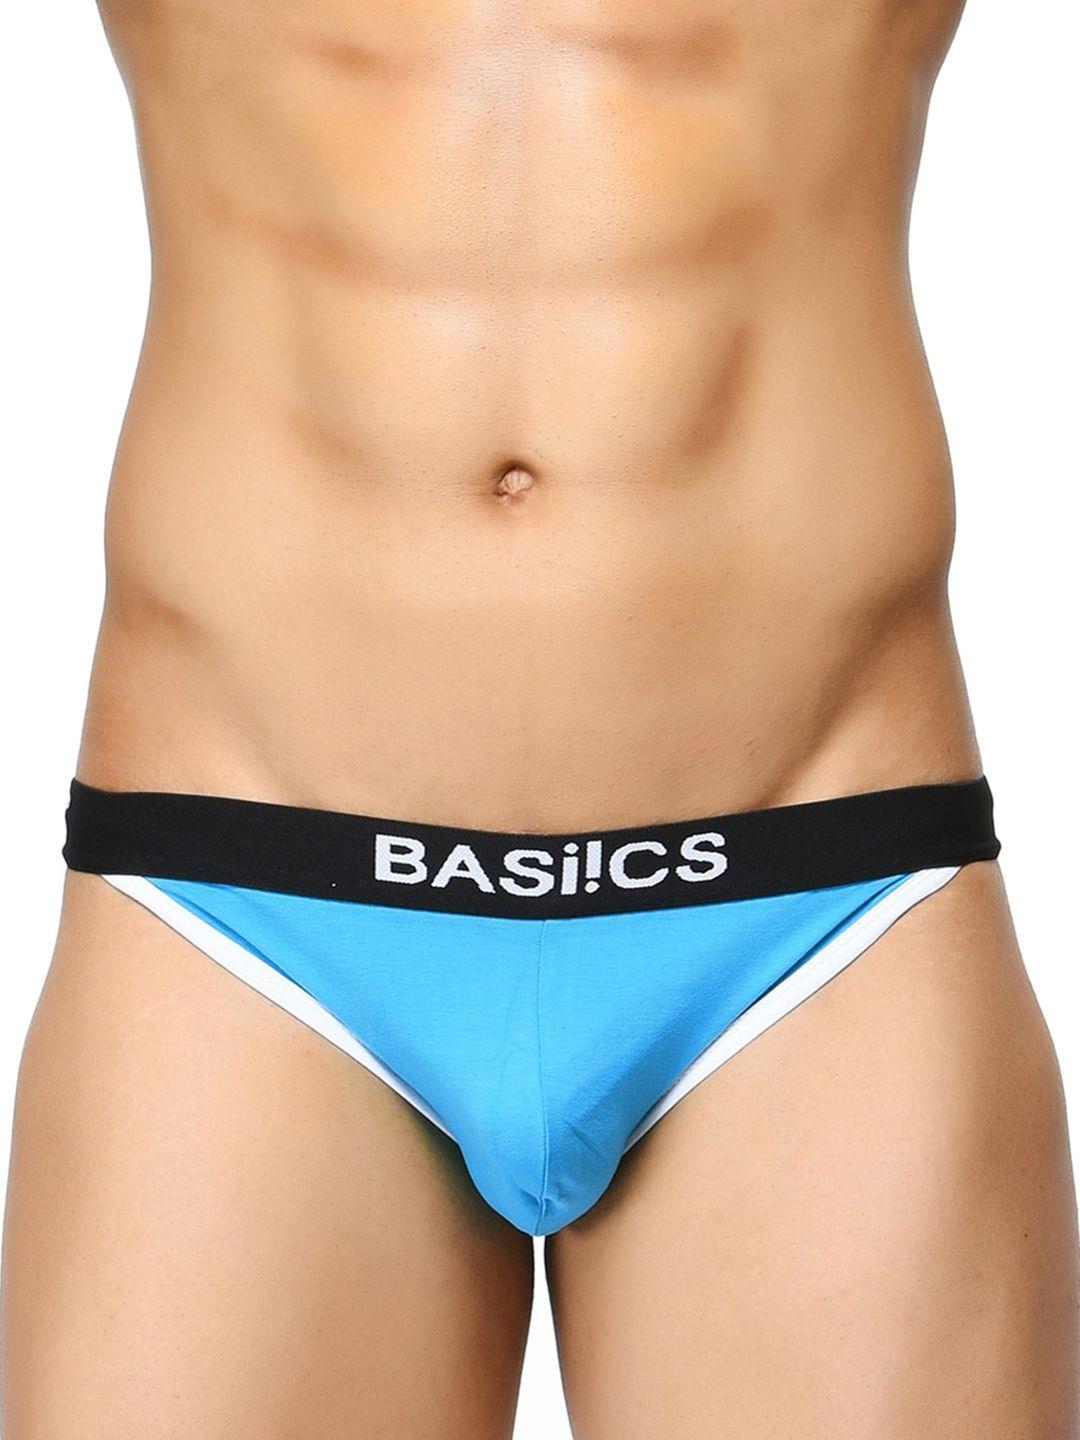 basiics by la intimo men low-rise thigh high bikini briefs